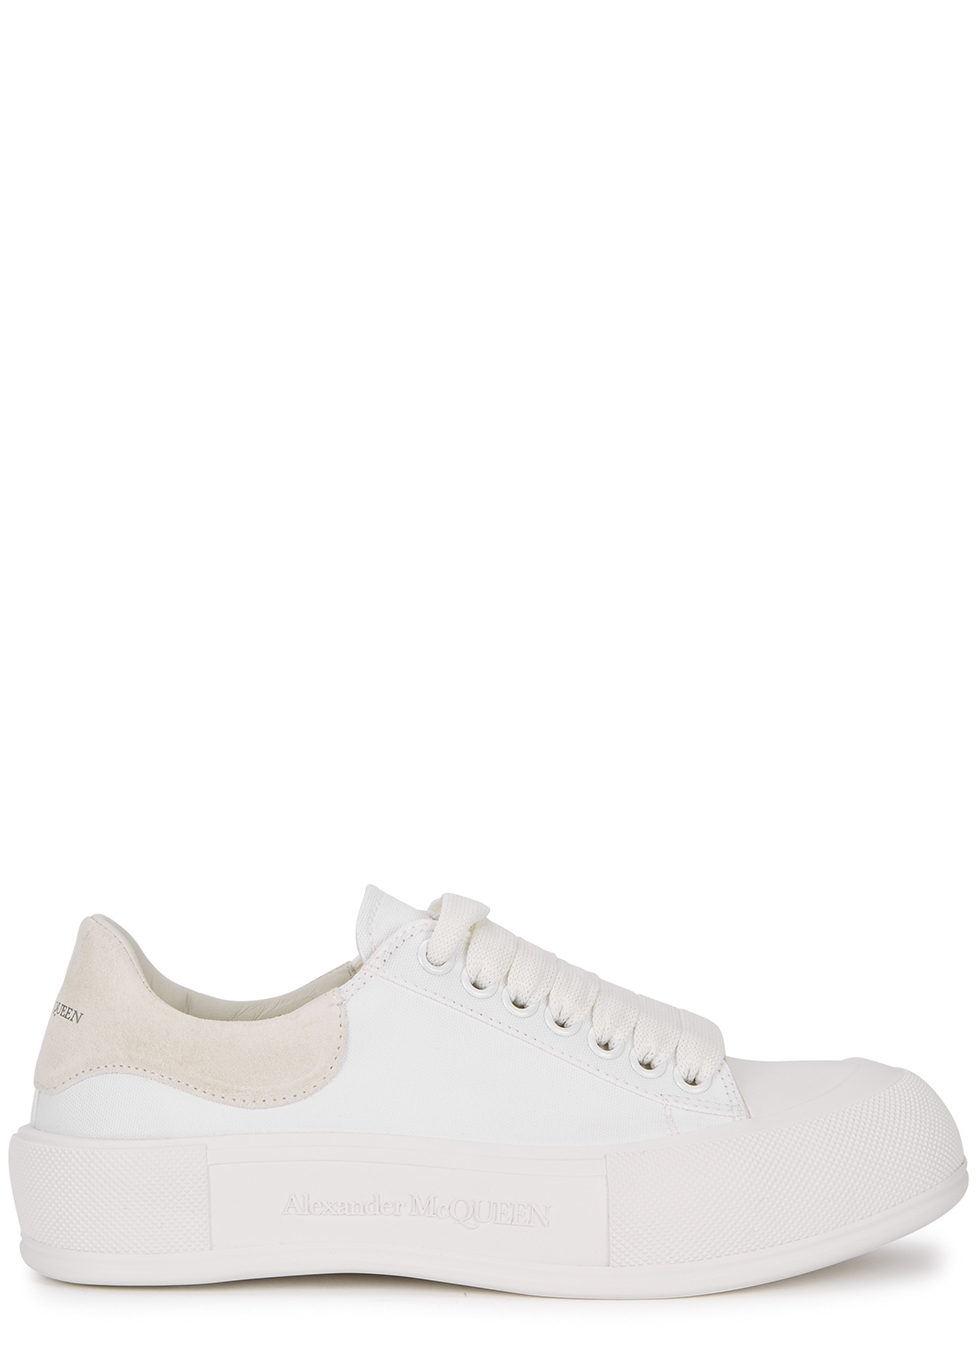 Alexander McQueen Deck white canvas sneakers - Harvey Nichols